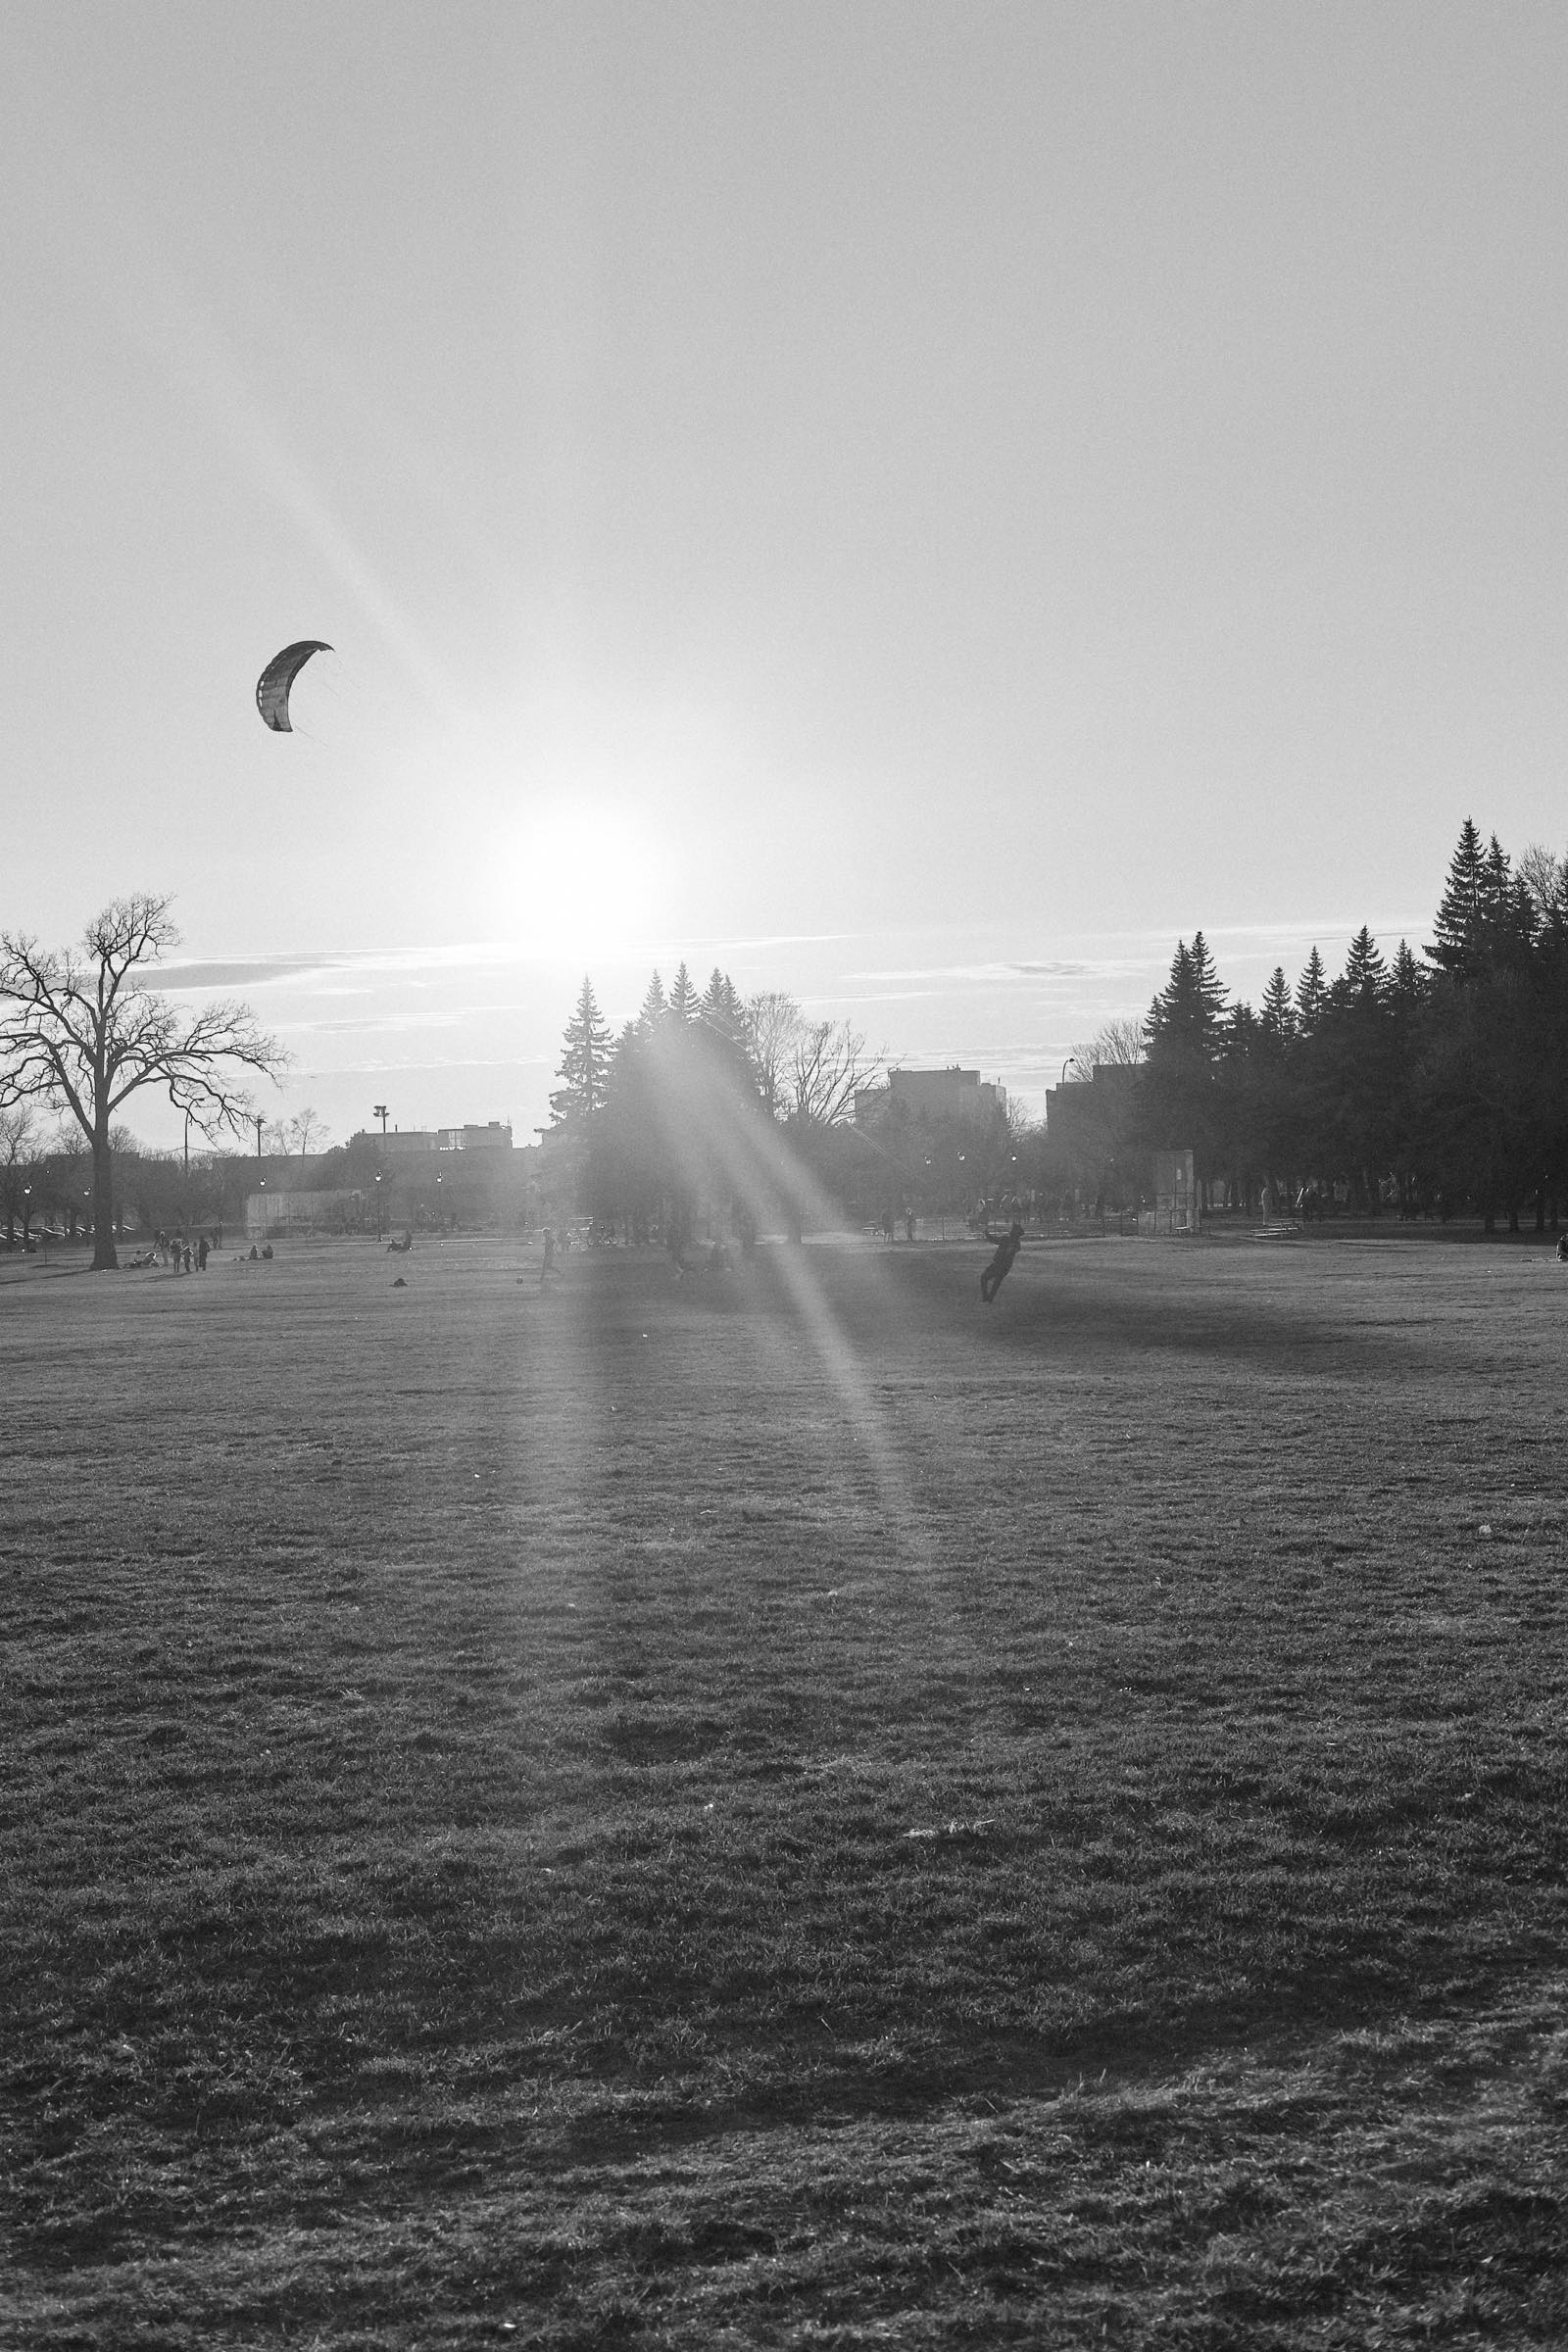 A man flies a large kite